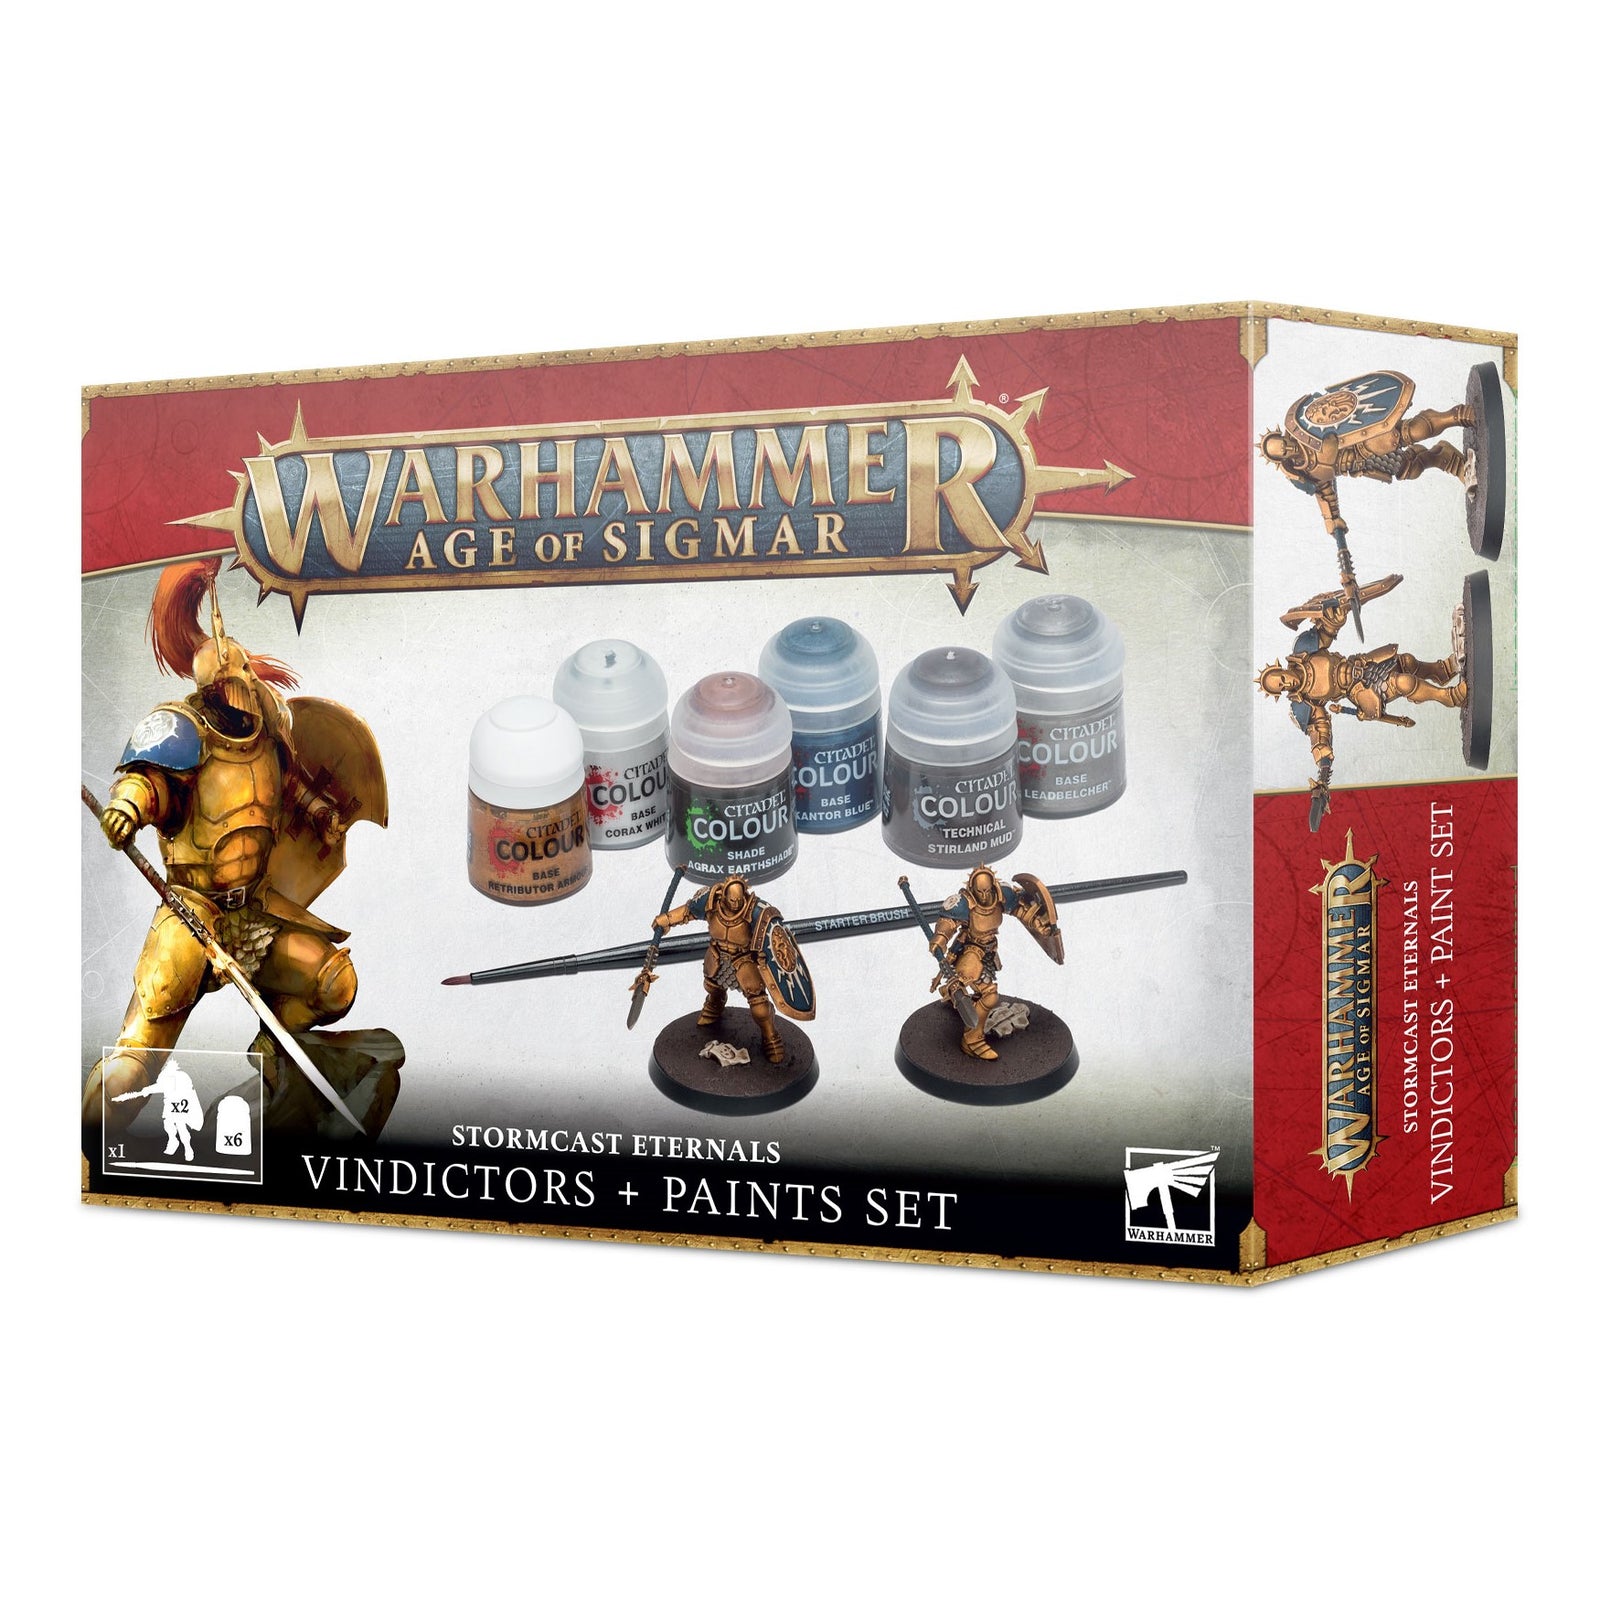 Stormcast Eternals Vindictors + Paints Set Warhammer Age of Sigmar